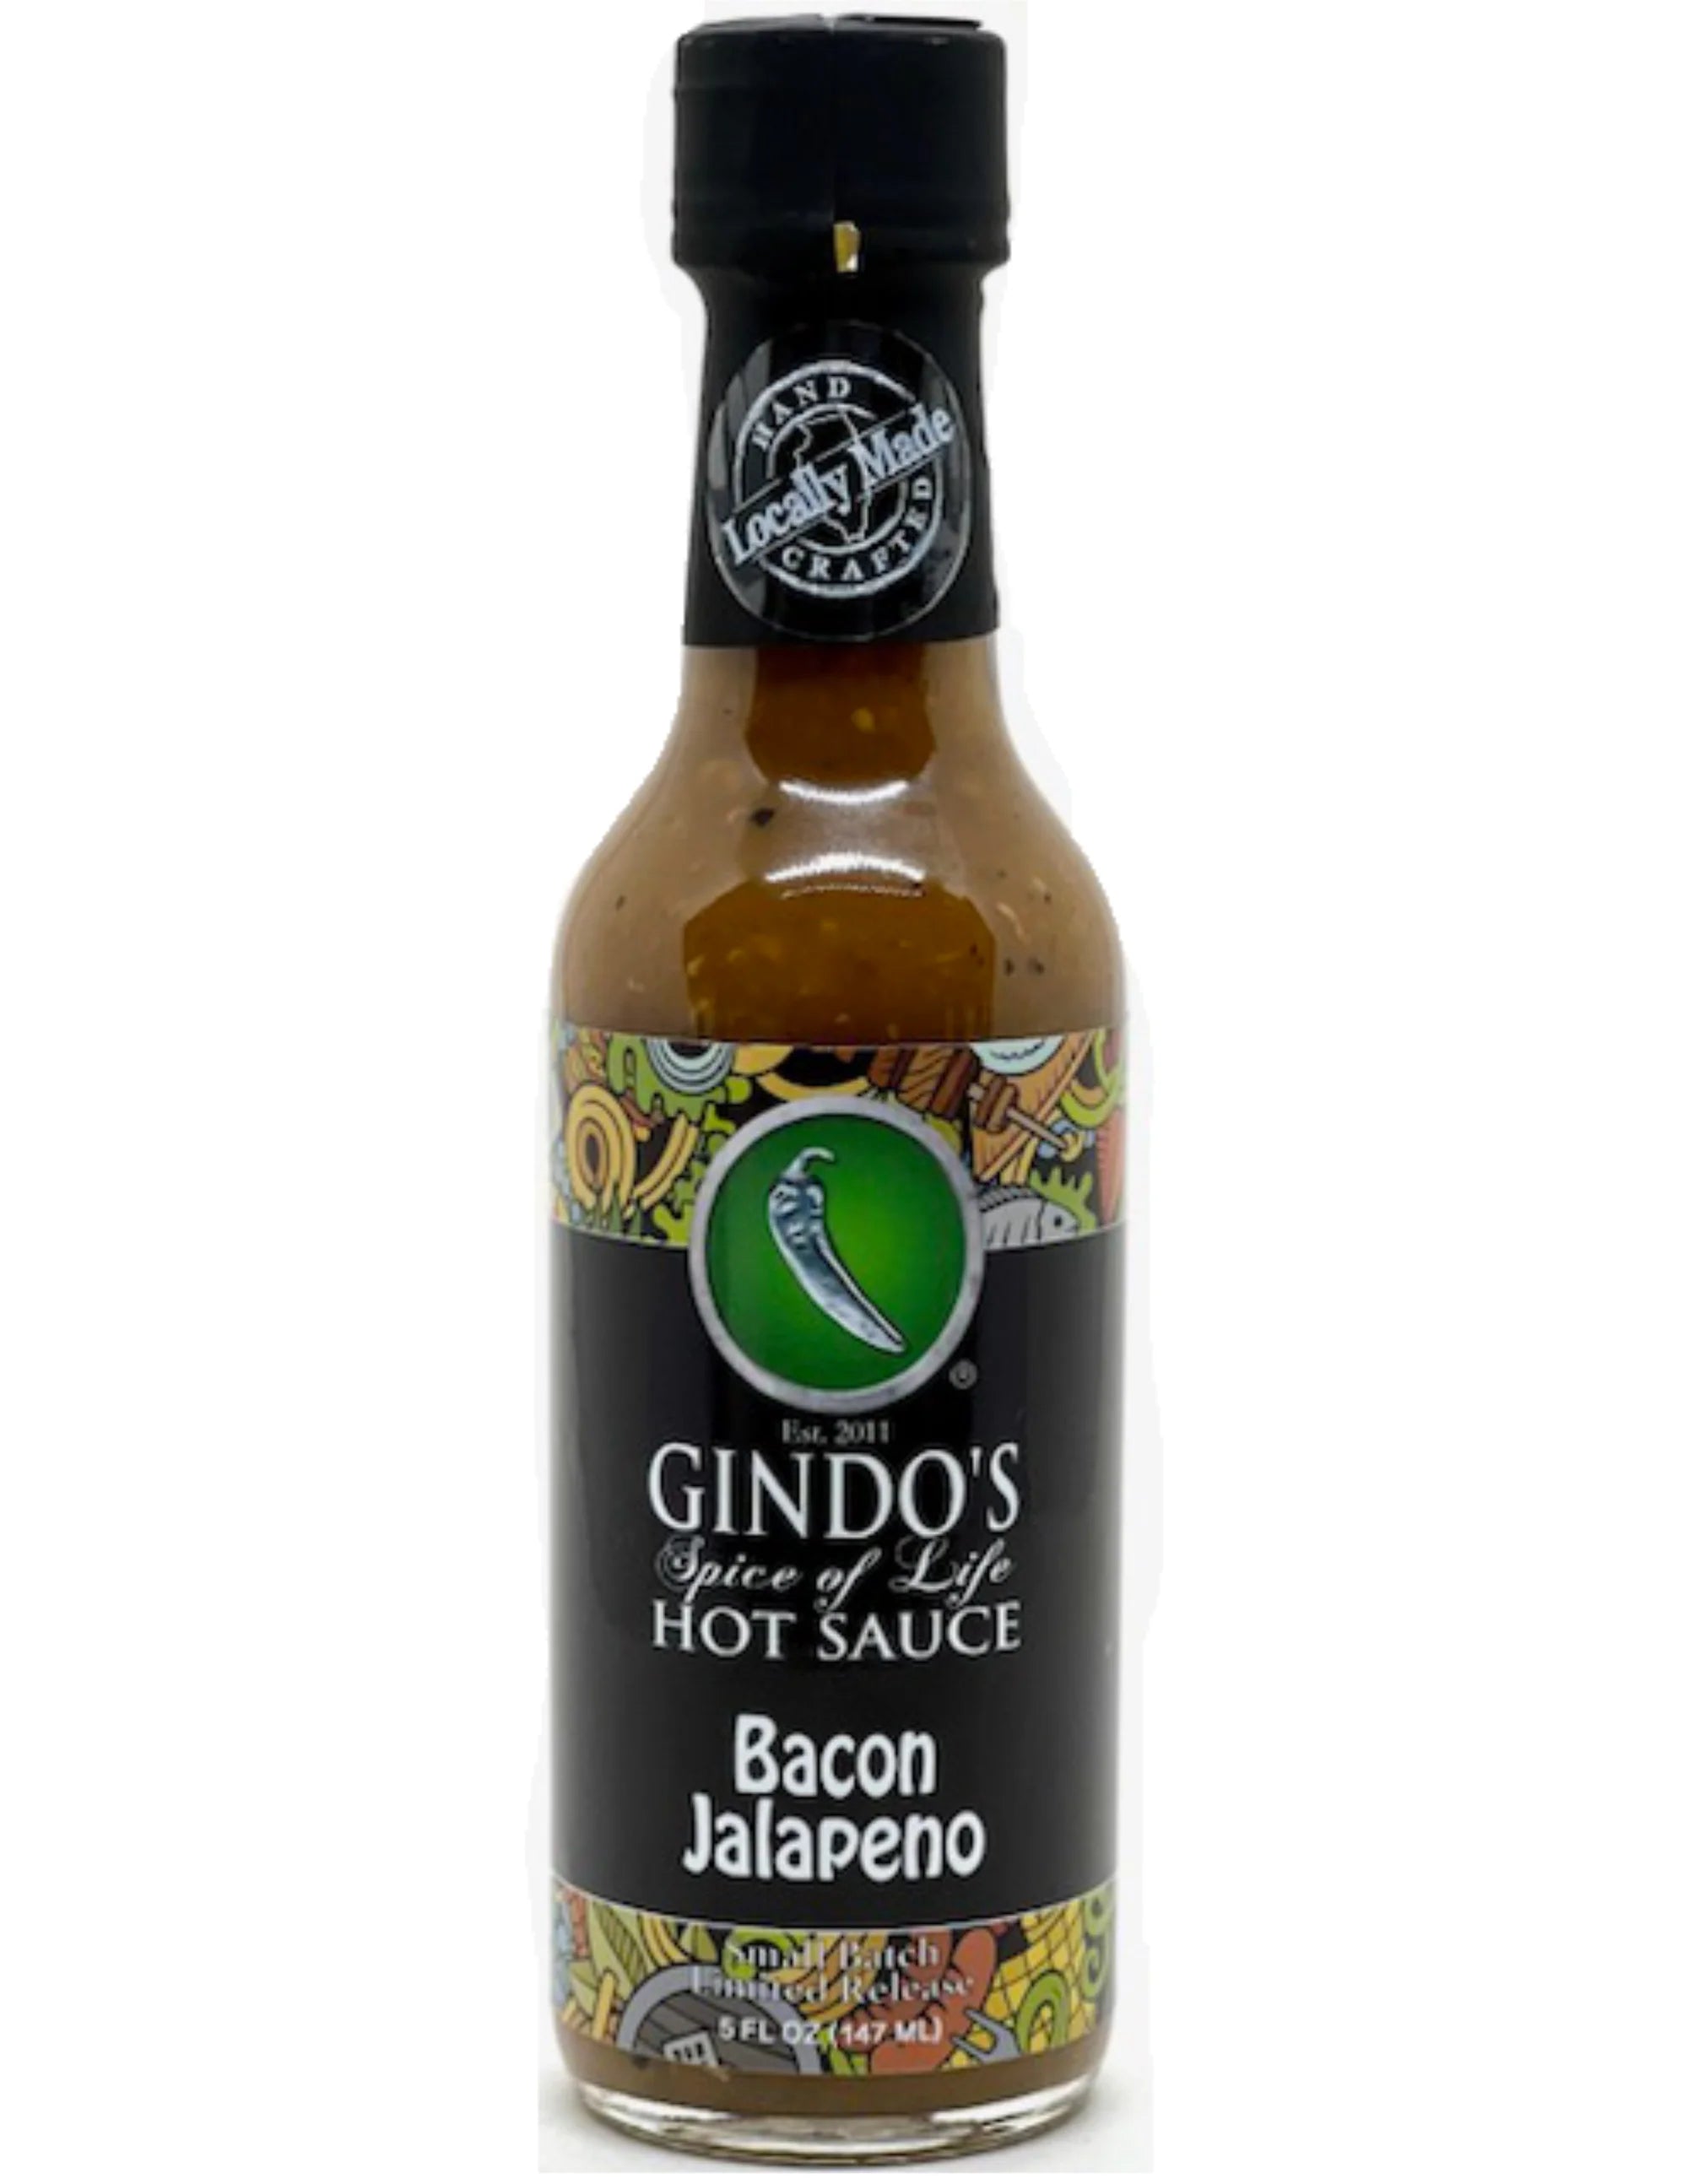 Gindo's Bacon Jalapeno Hot Sauce